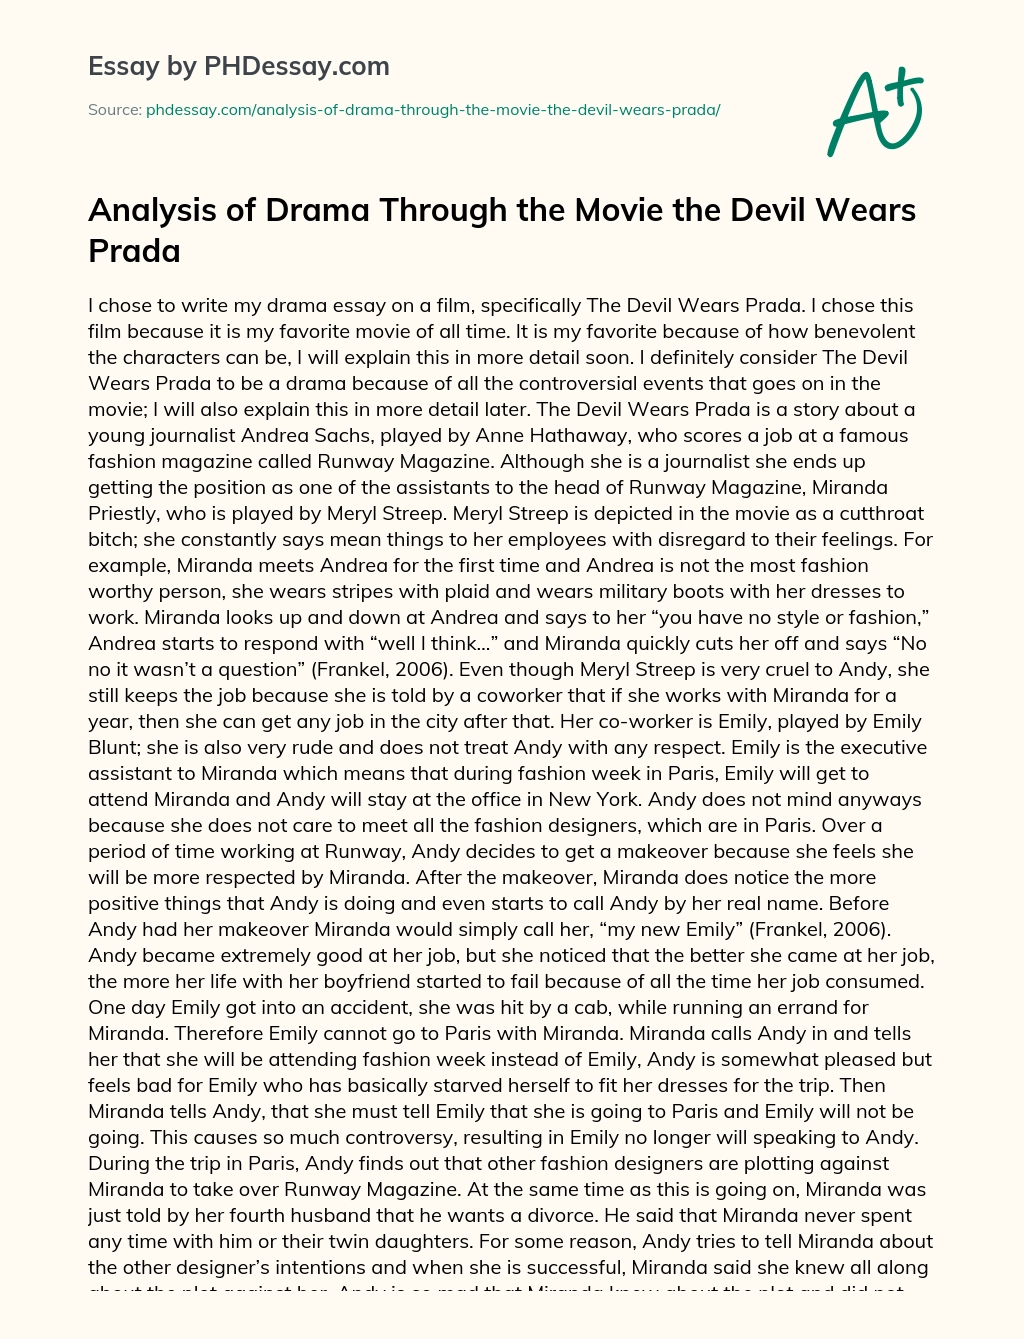 Analysis of Drama Through the Movie the Devil Wears Prada essay